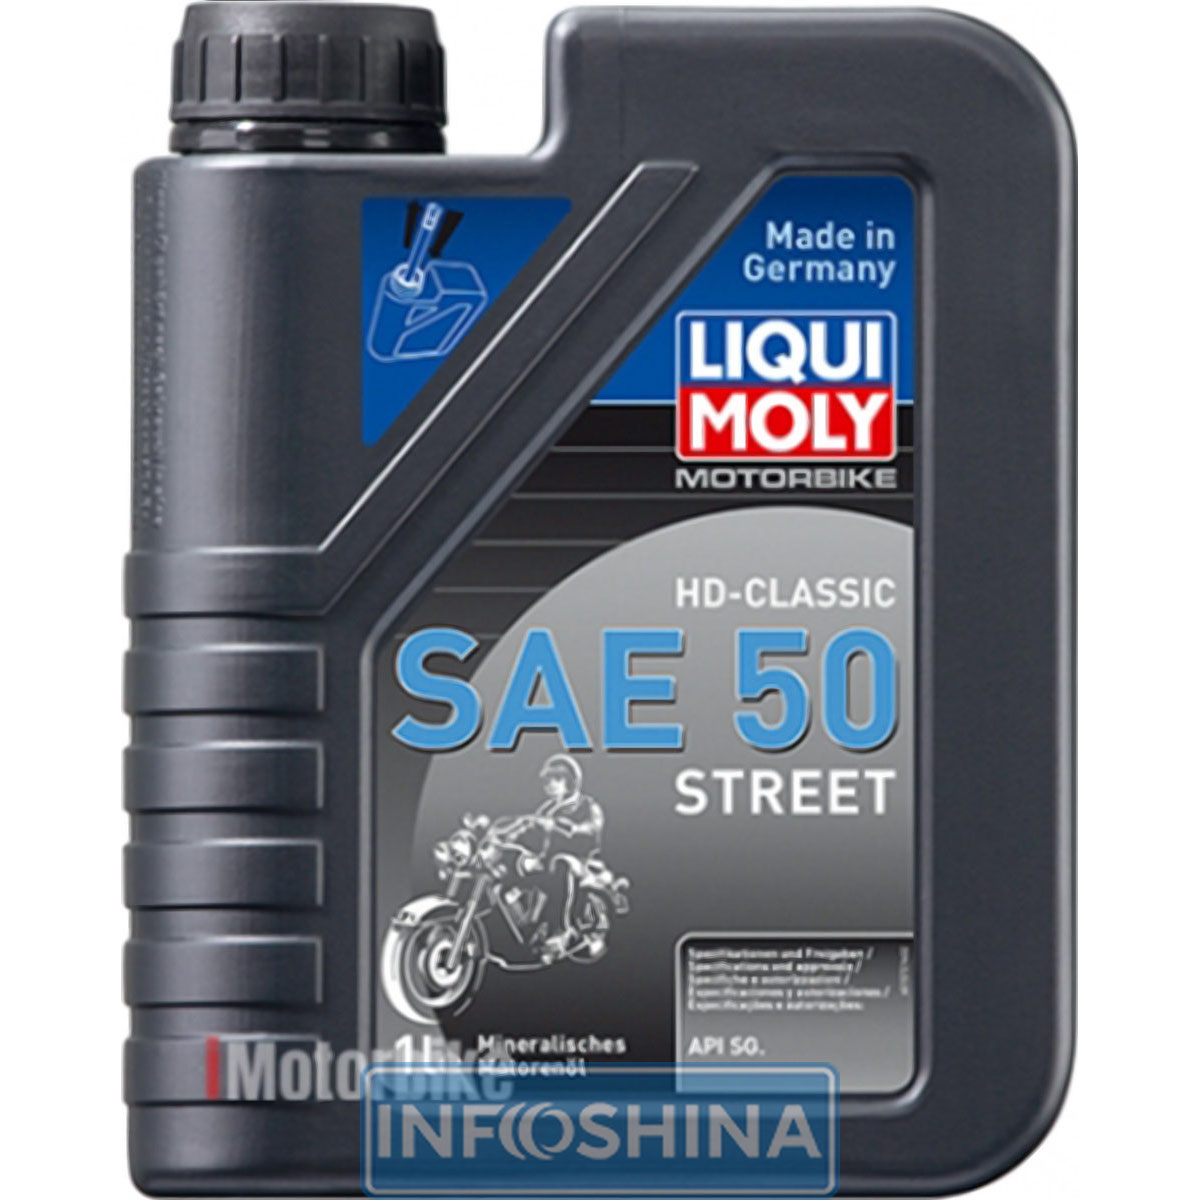 Купить масло Liqui Moly Motorbike HD-Classic Street SAE 50 (1л)